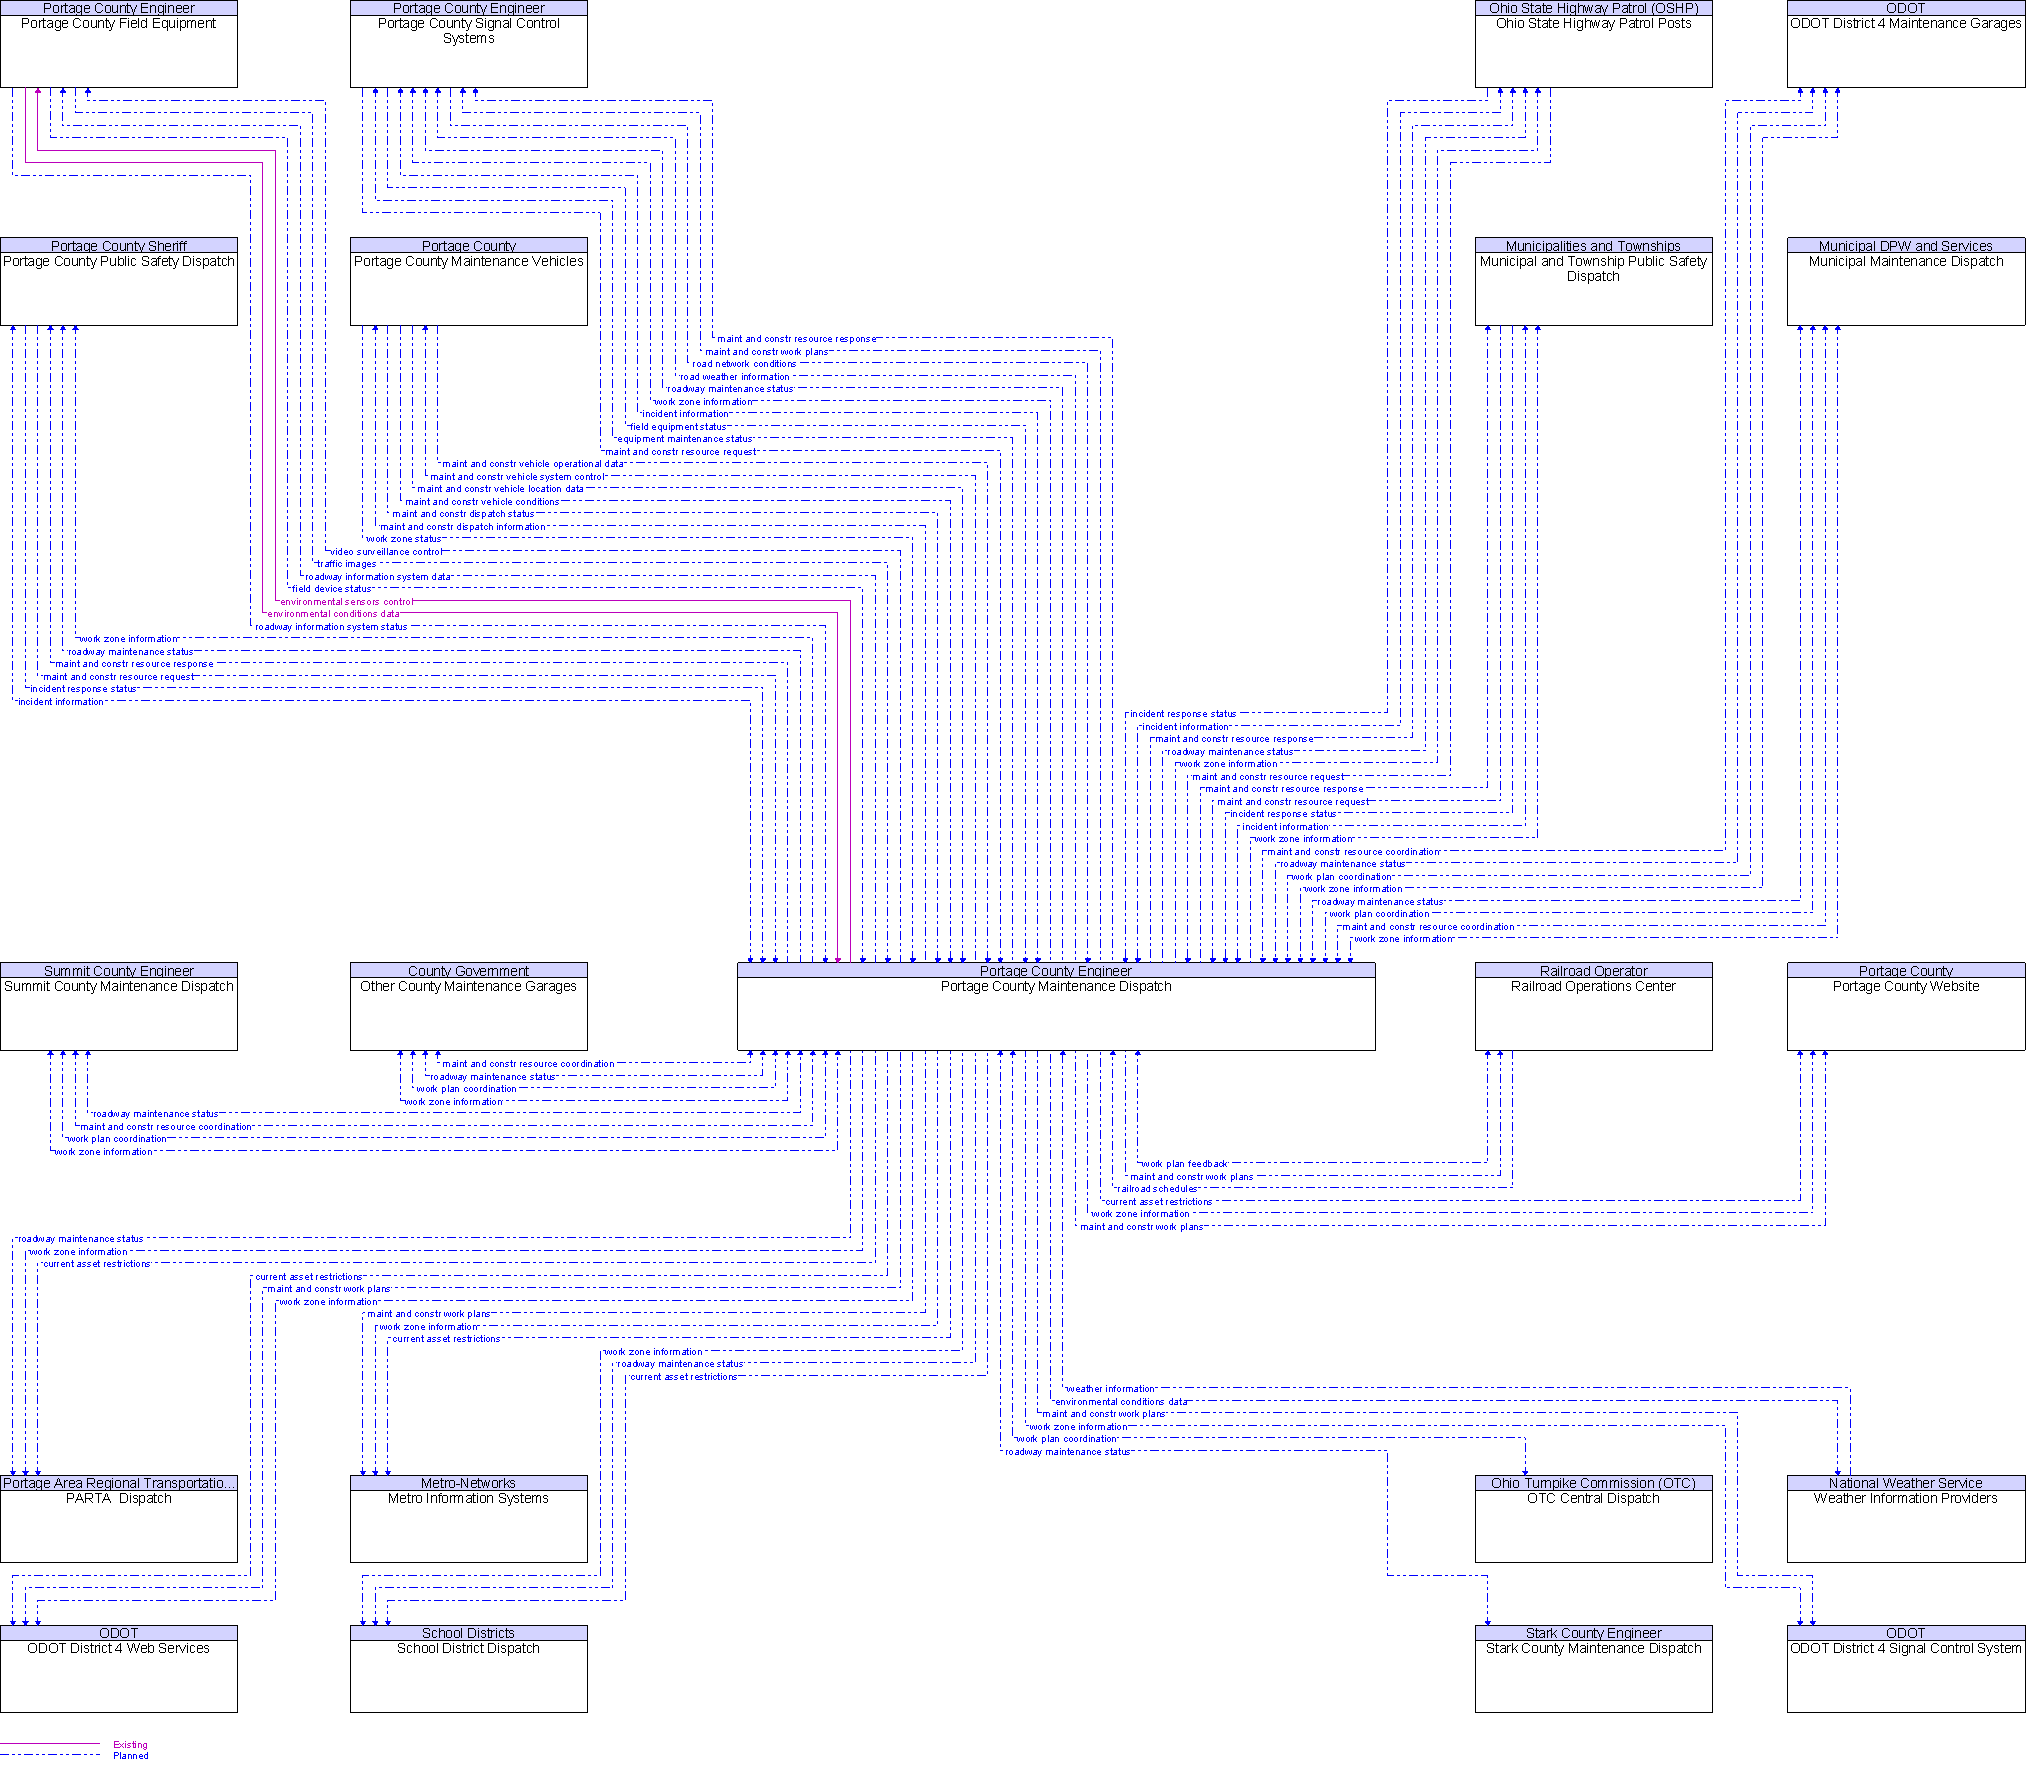 Context Diagram for Portage County Maintenance Dispatch